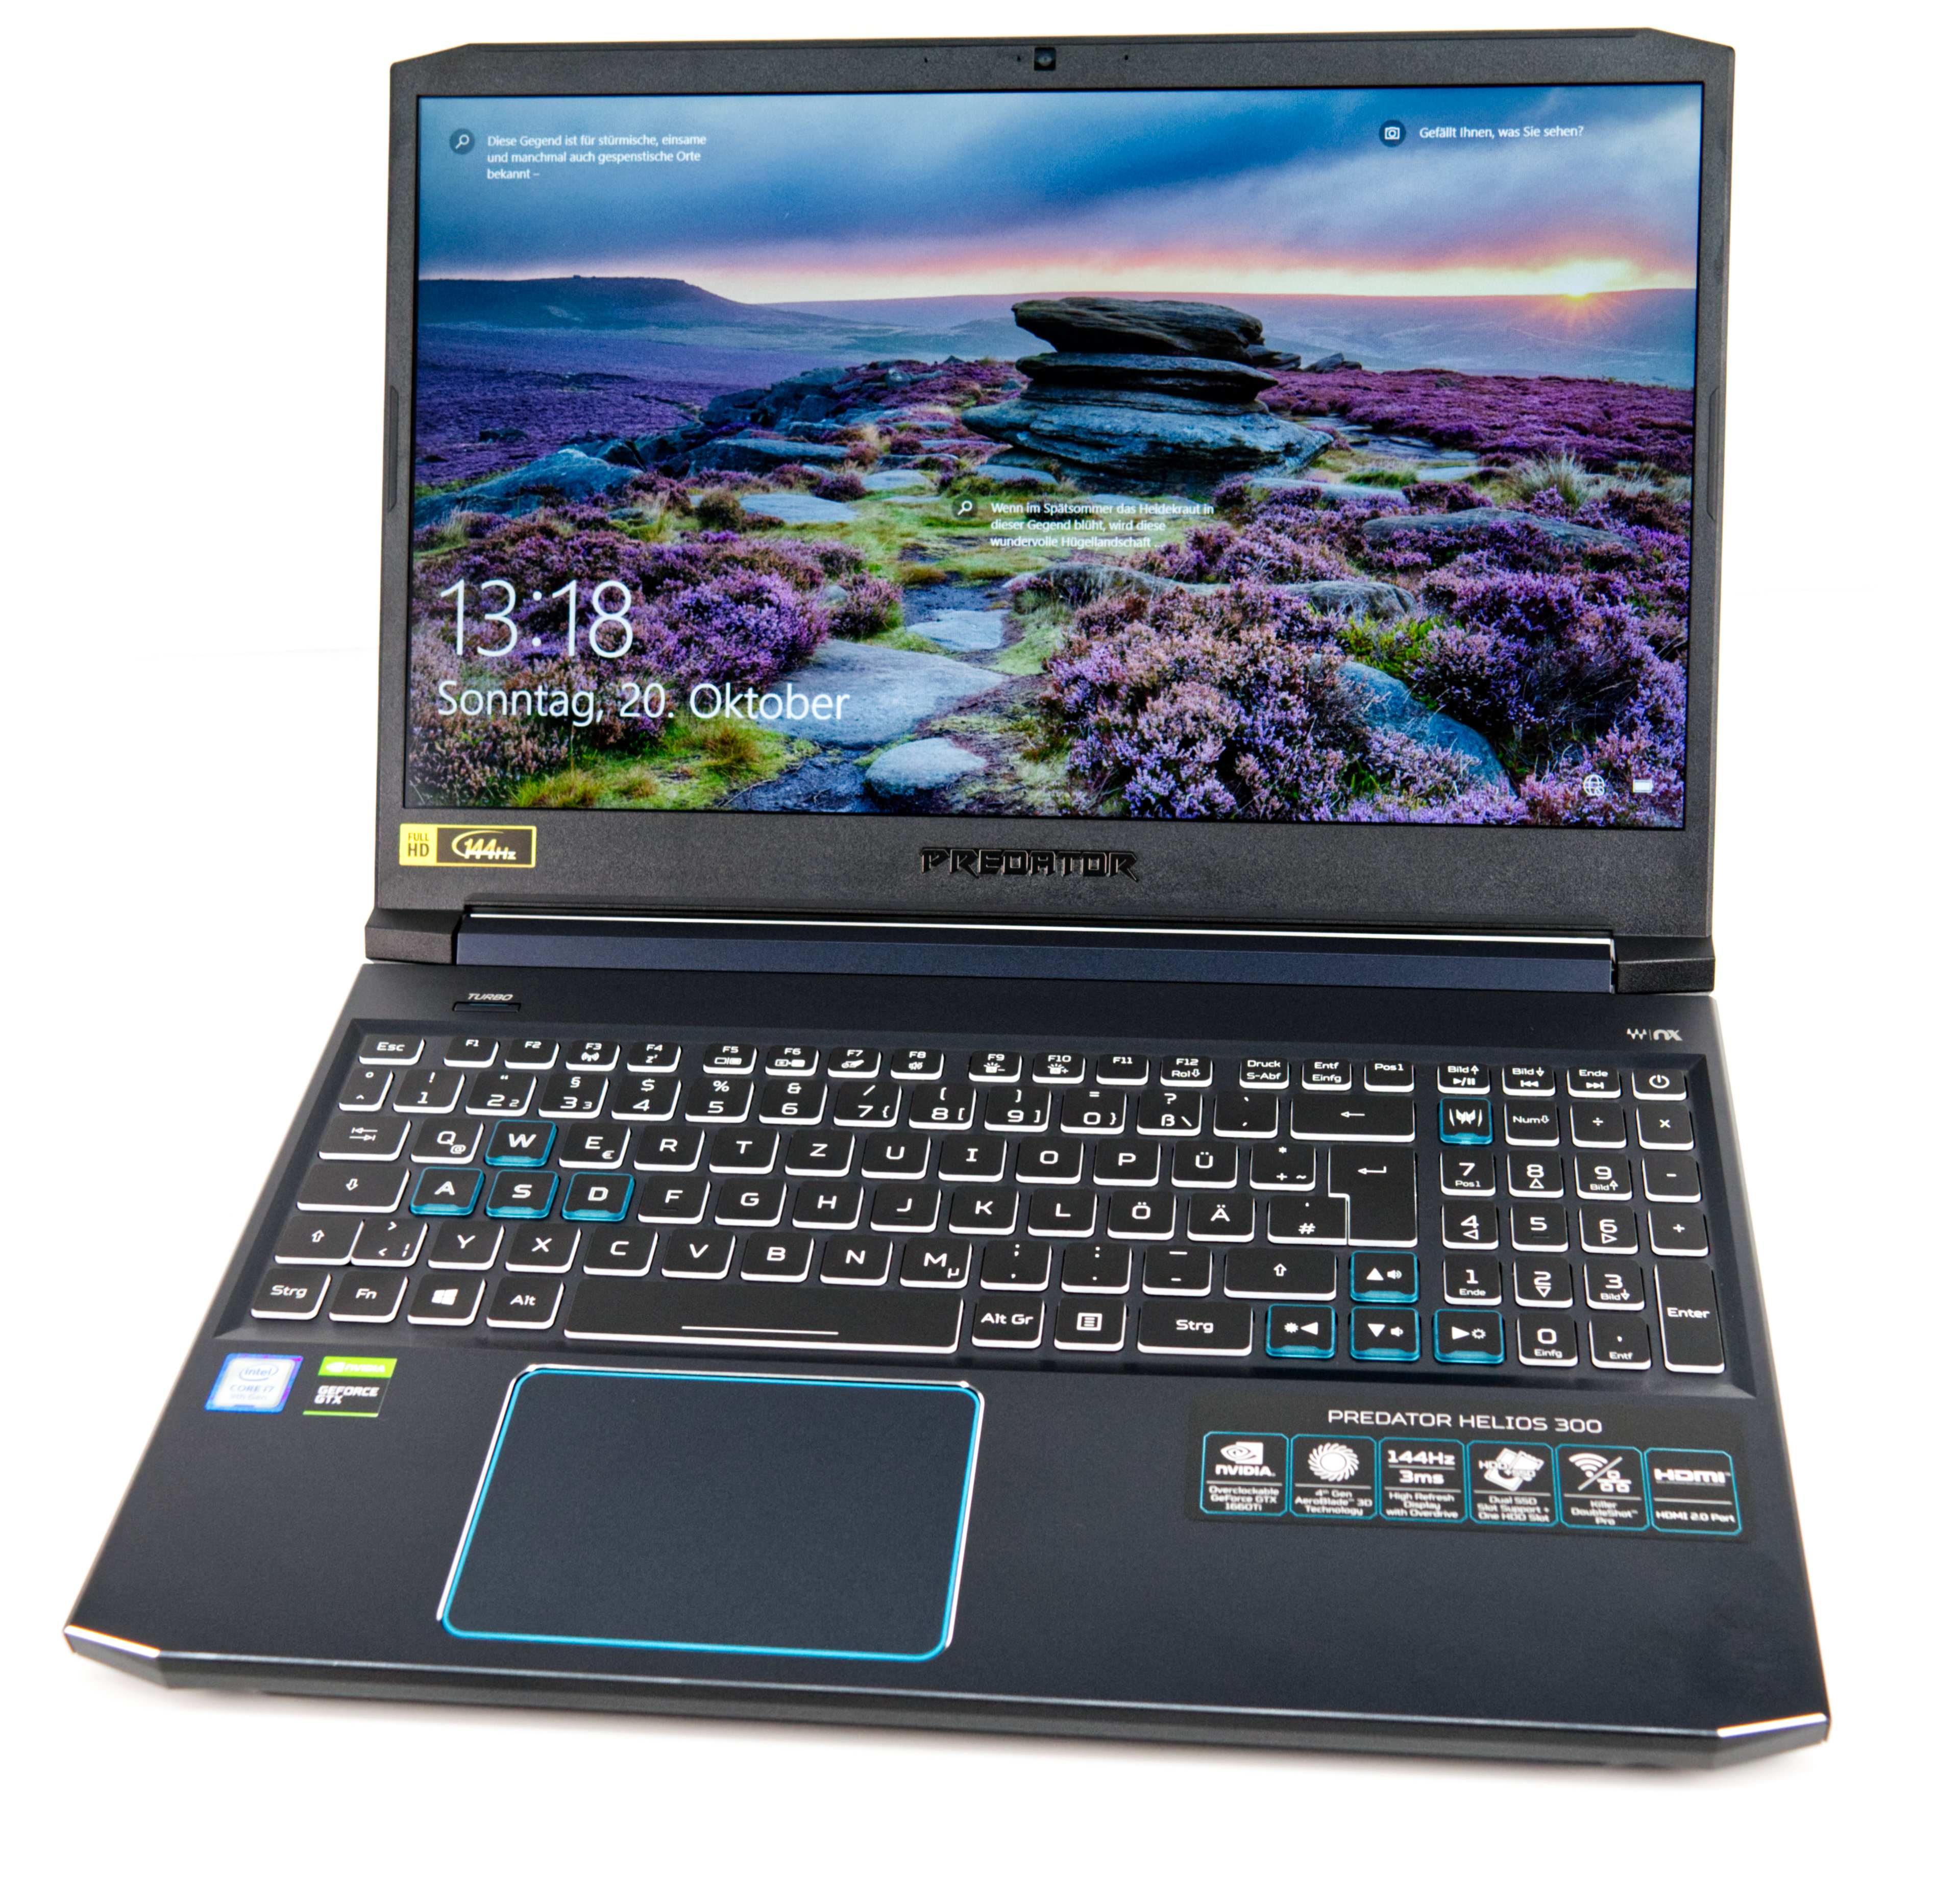 Acer Predator Helios 300 Laptop Review: A modern gaming laptop